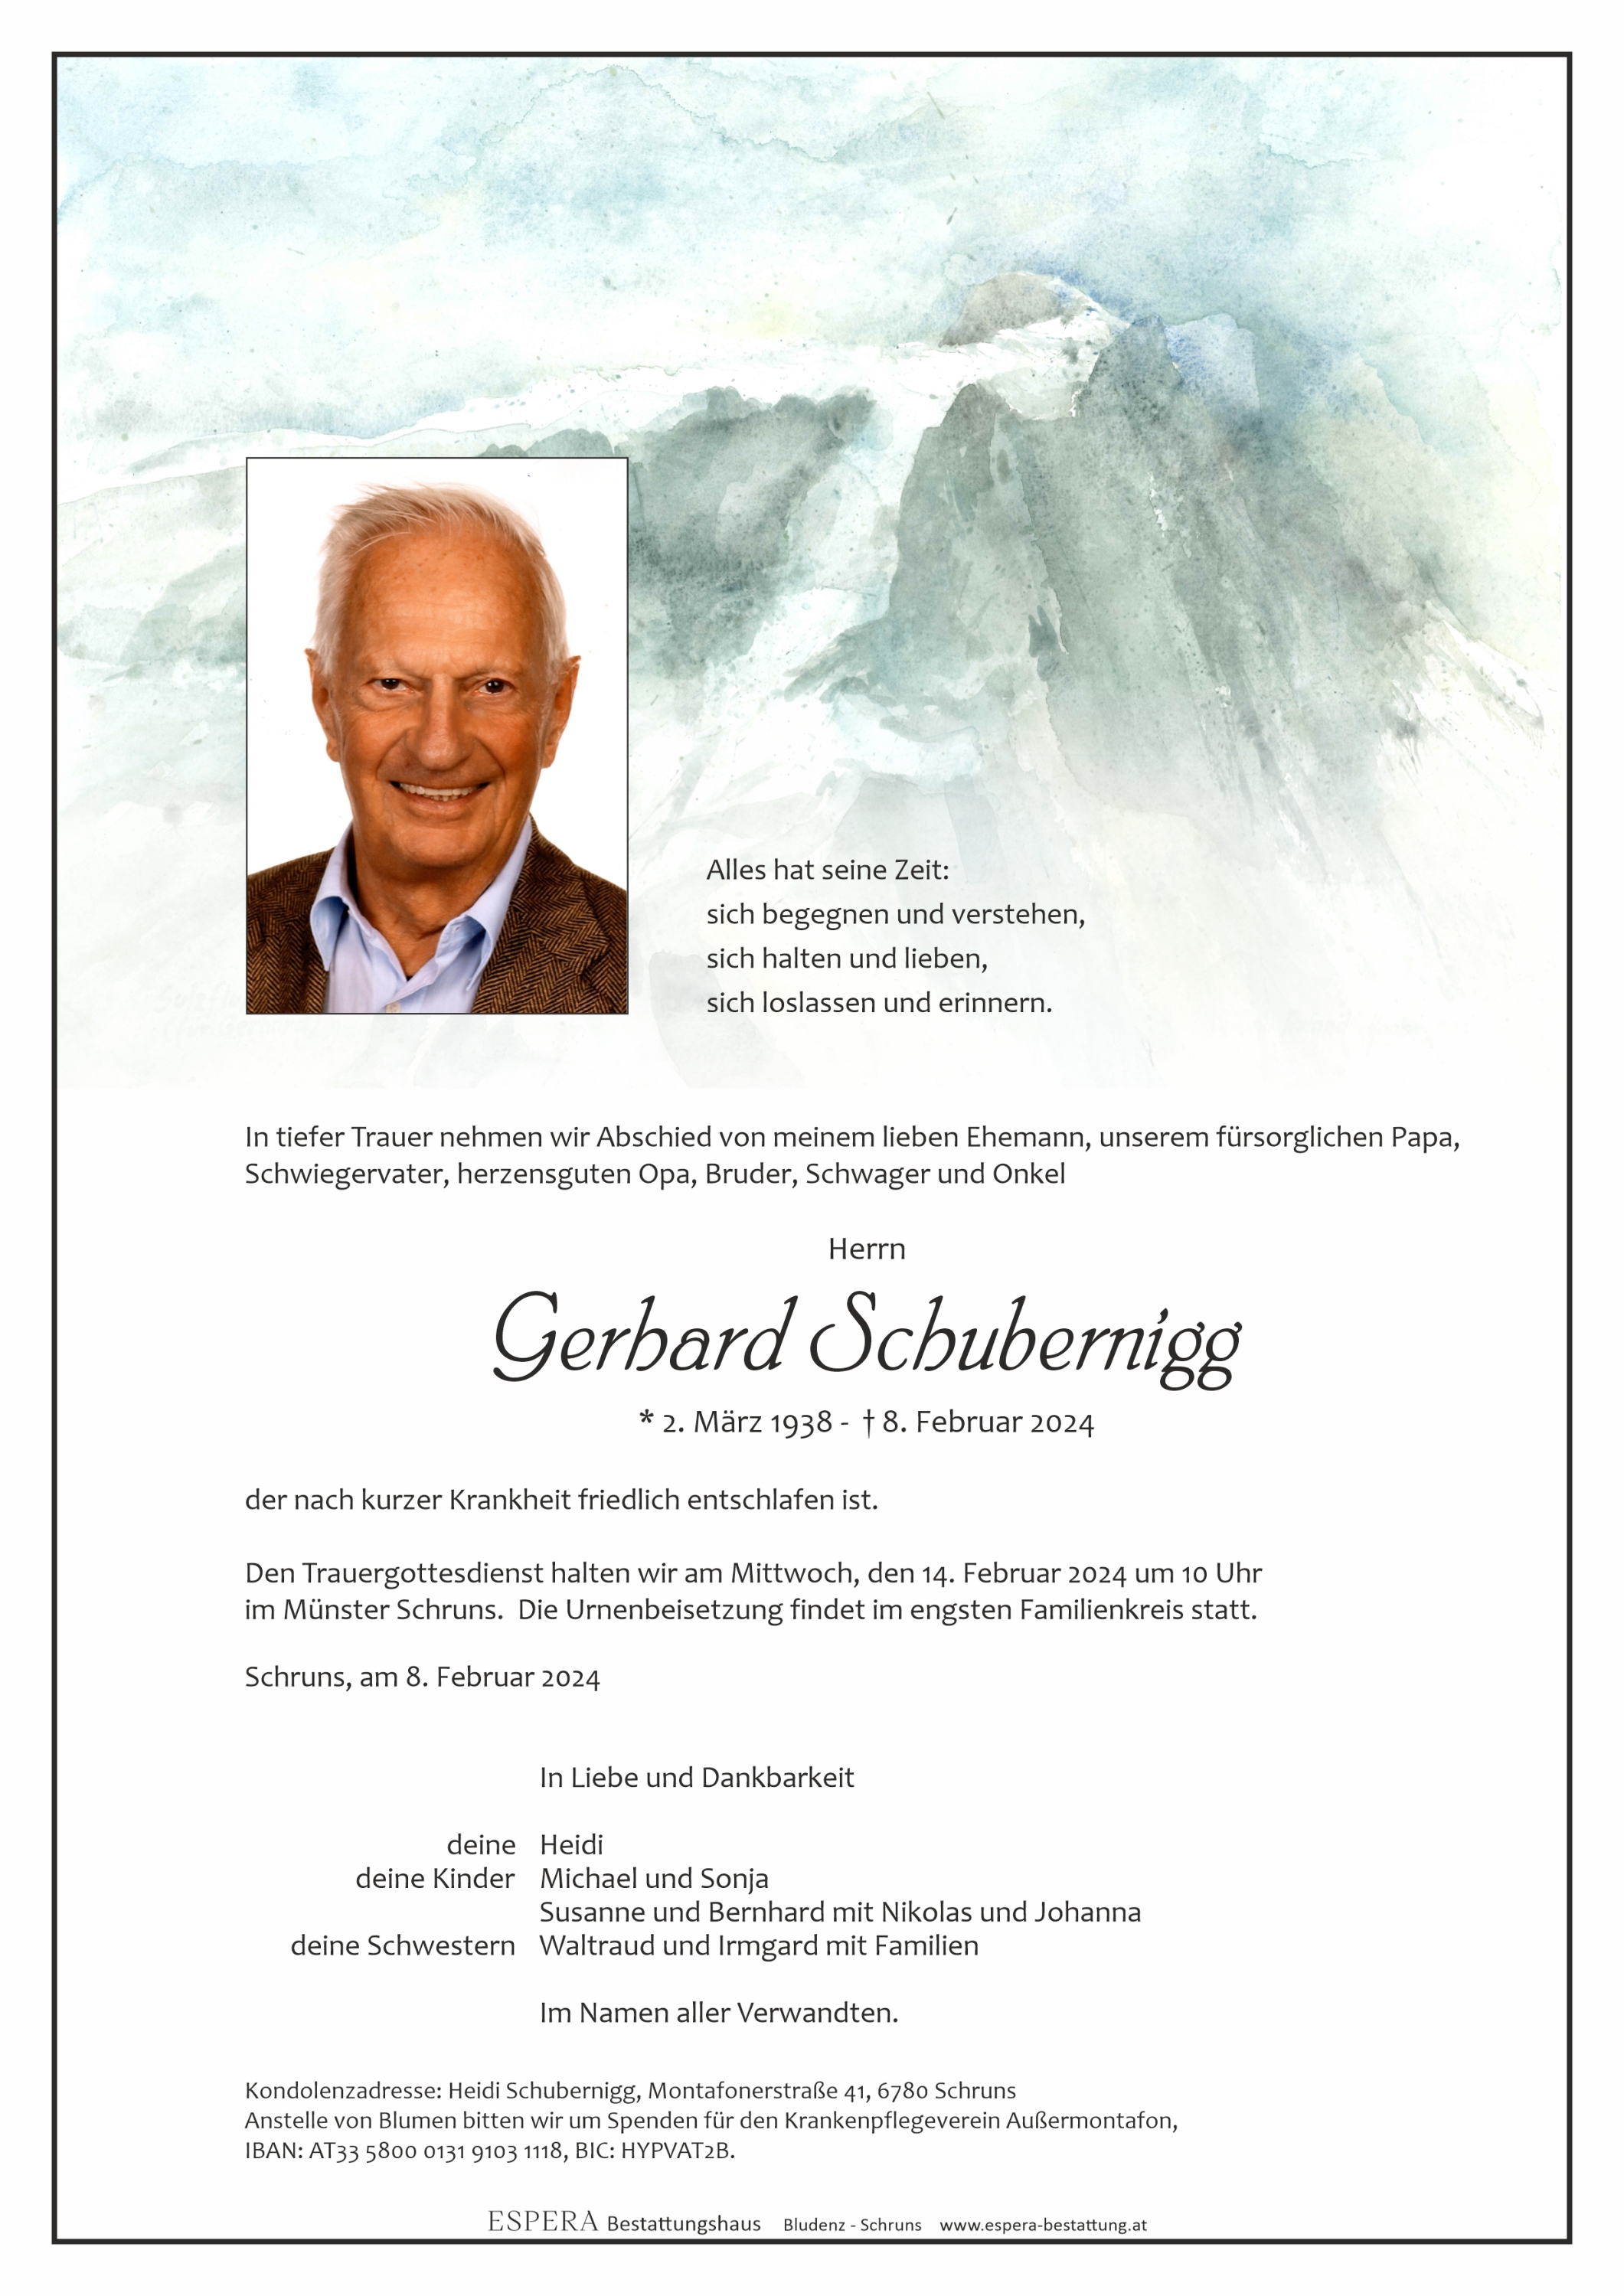 Gerhard Schubernigg